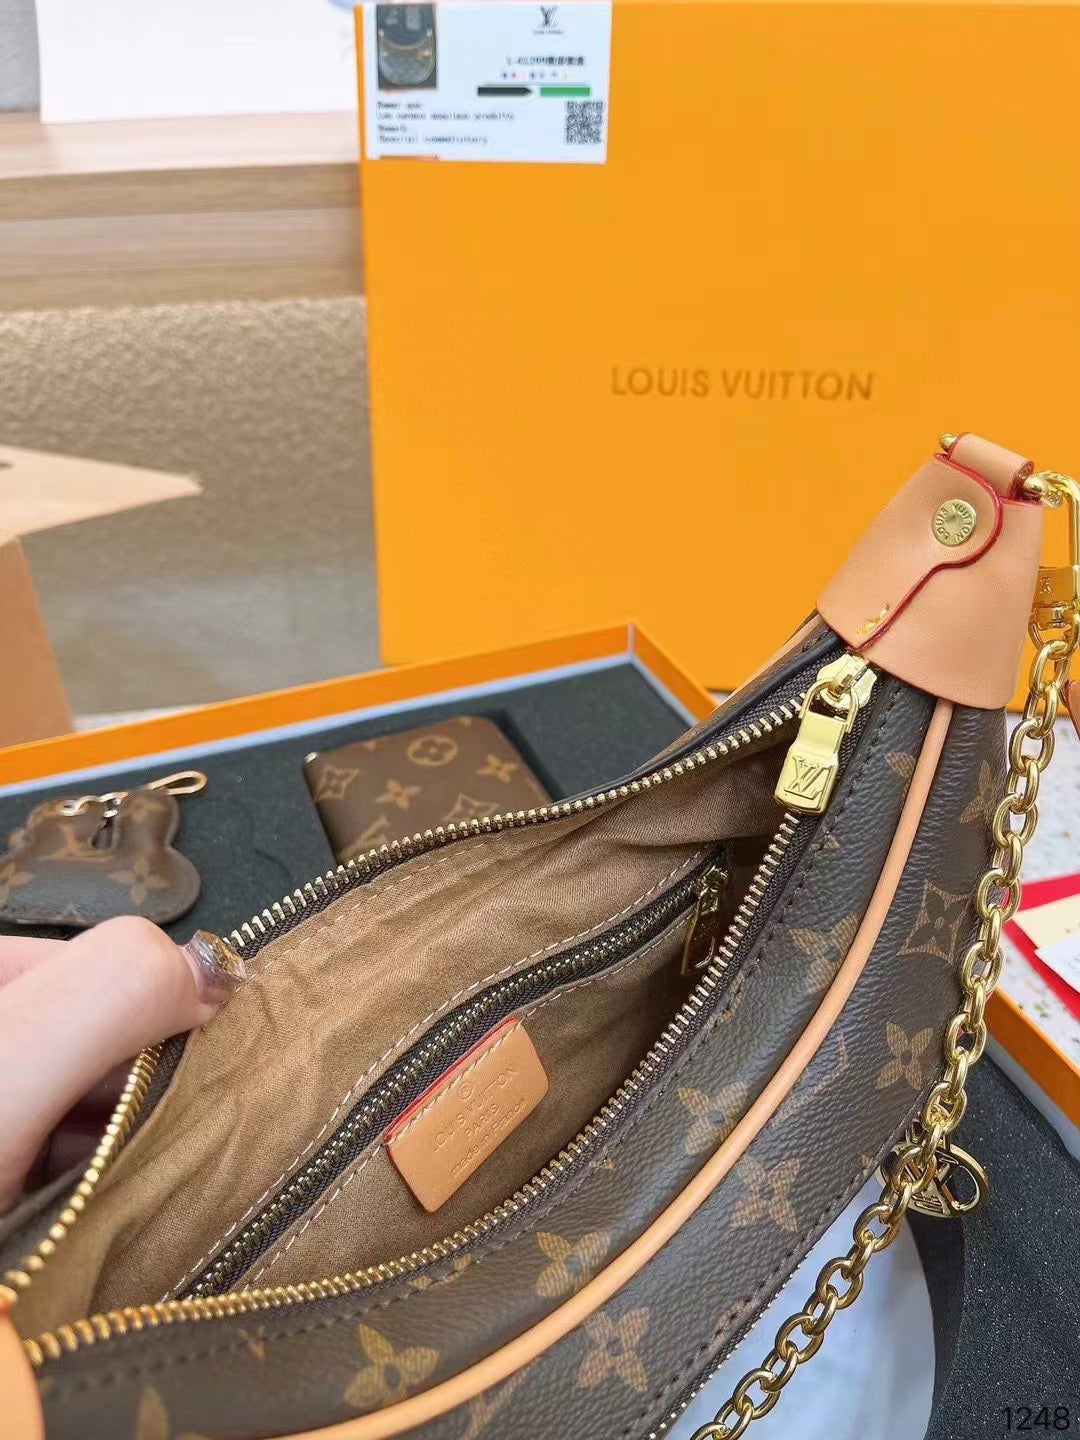 Louis vuitton handbag set